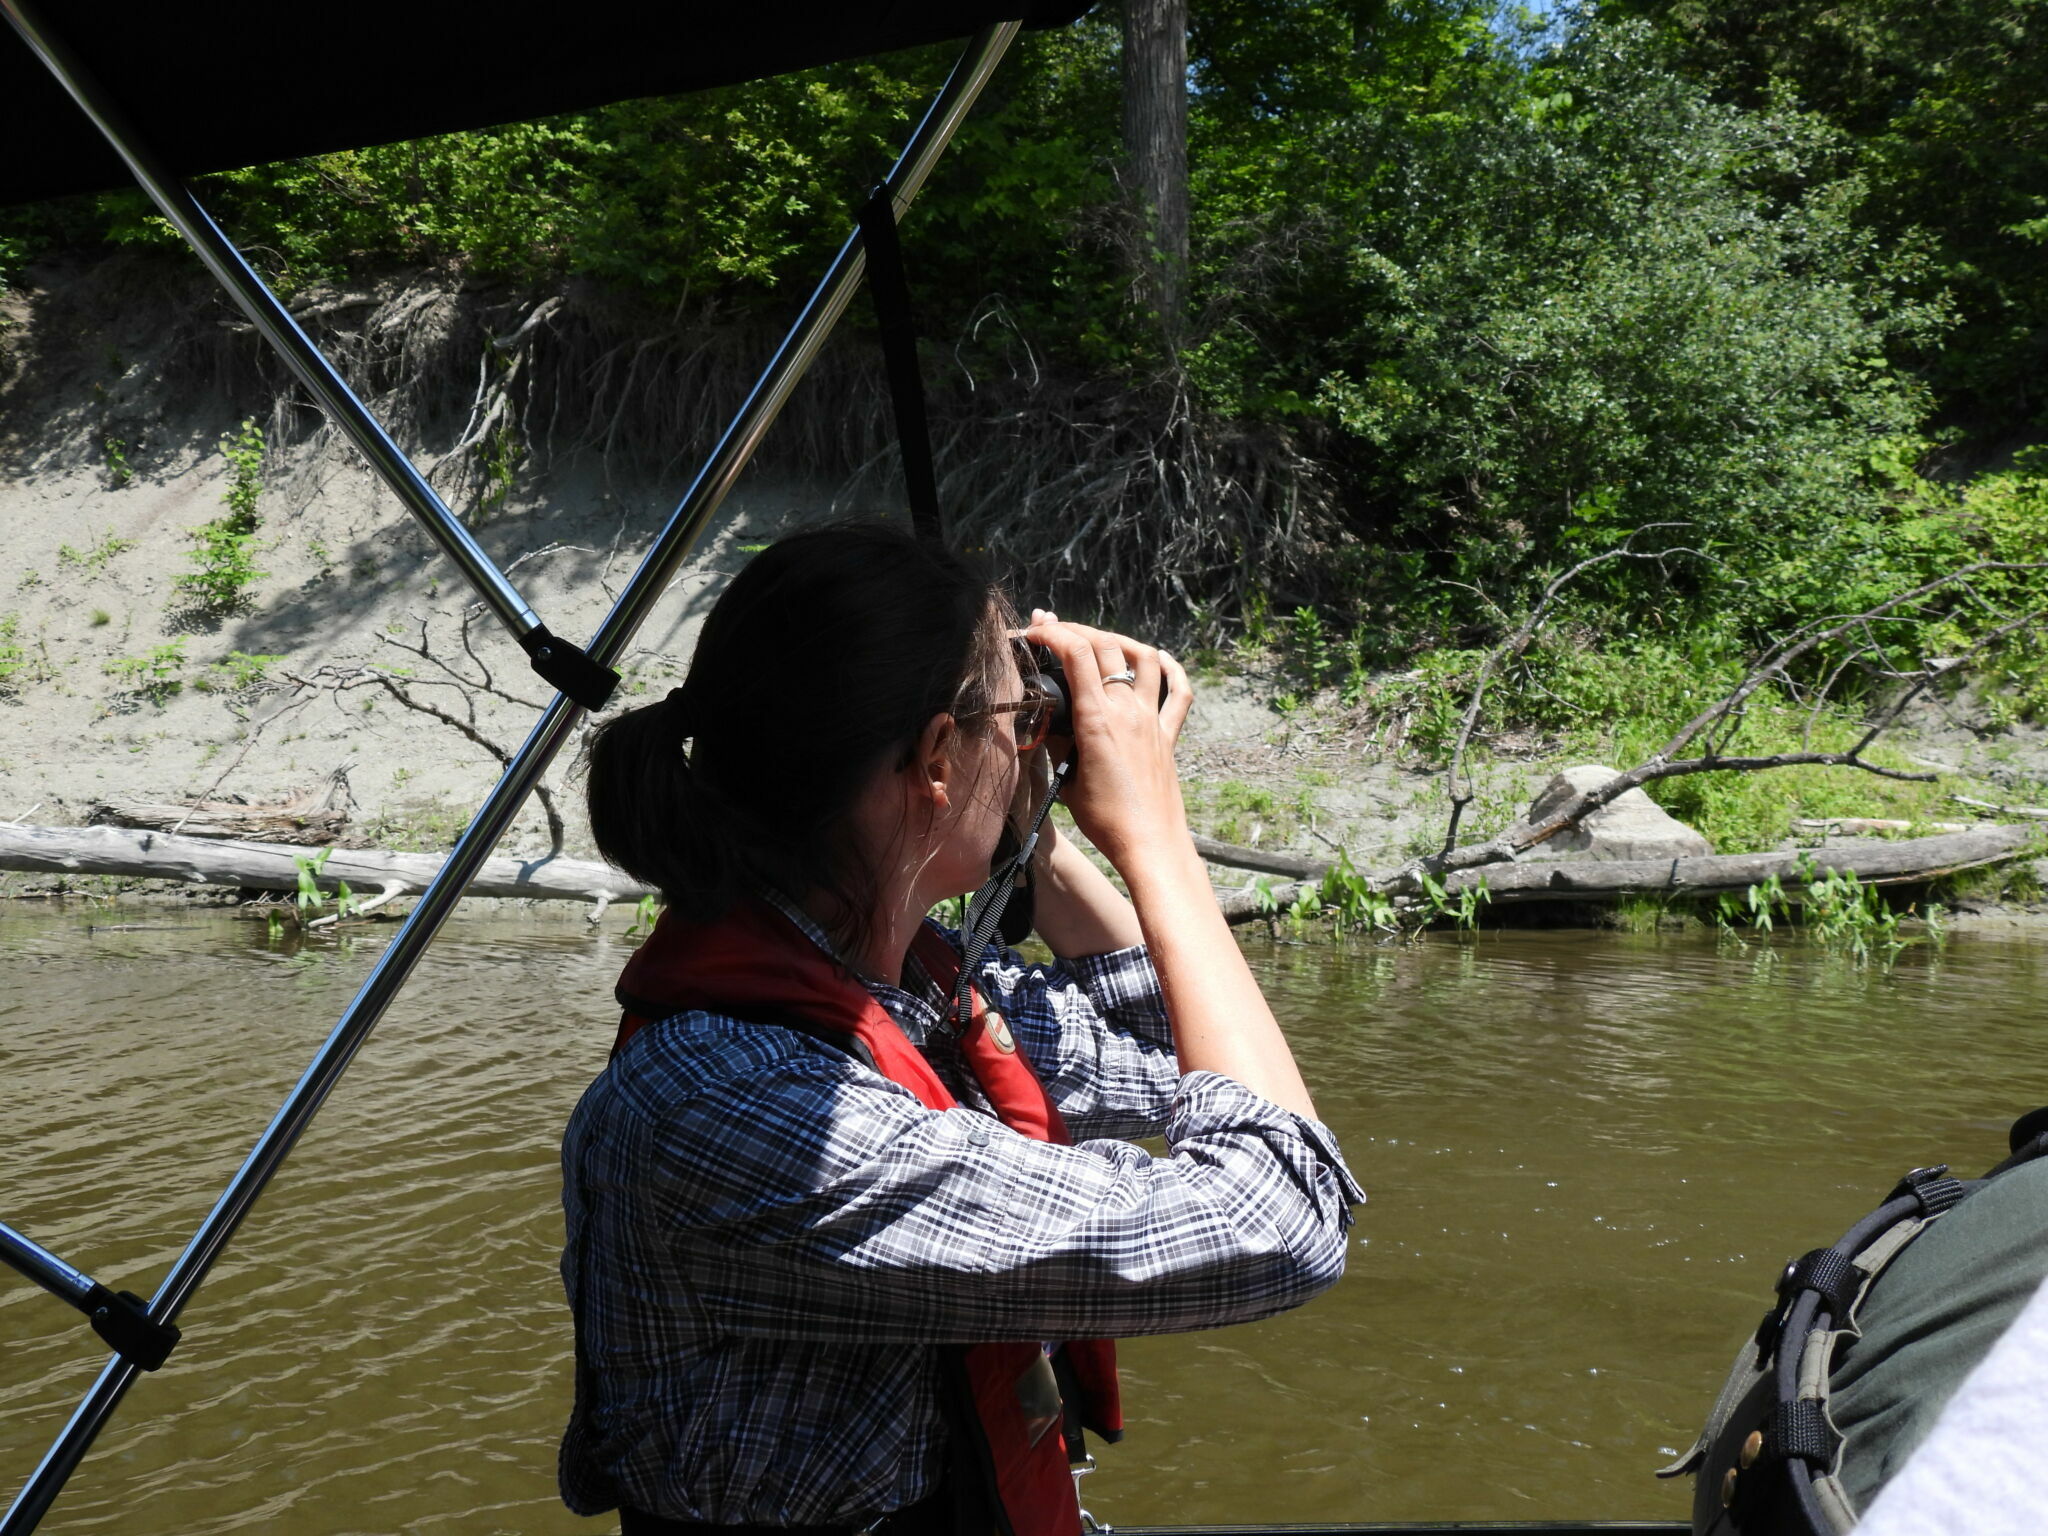 Biologist observing through binoculars